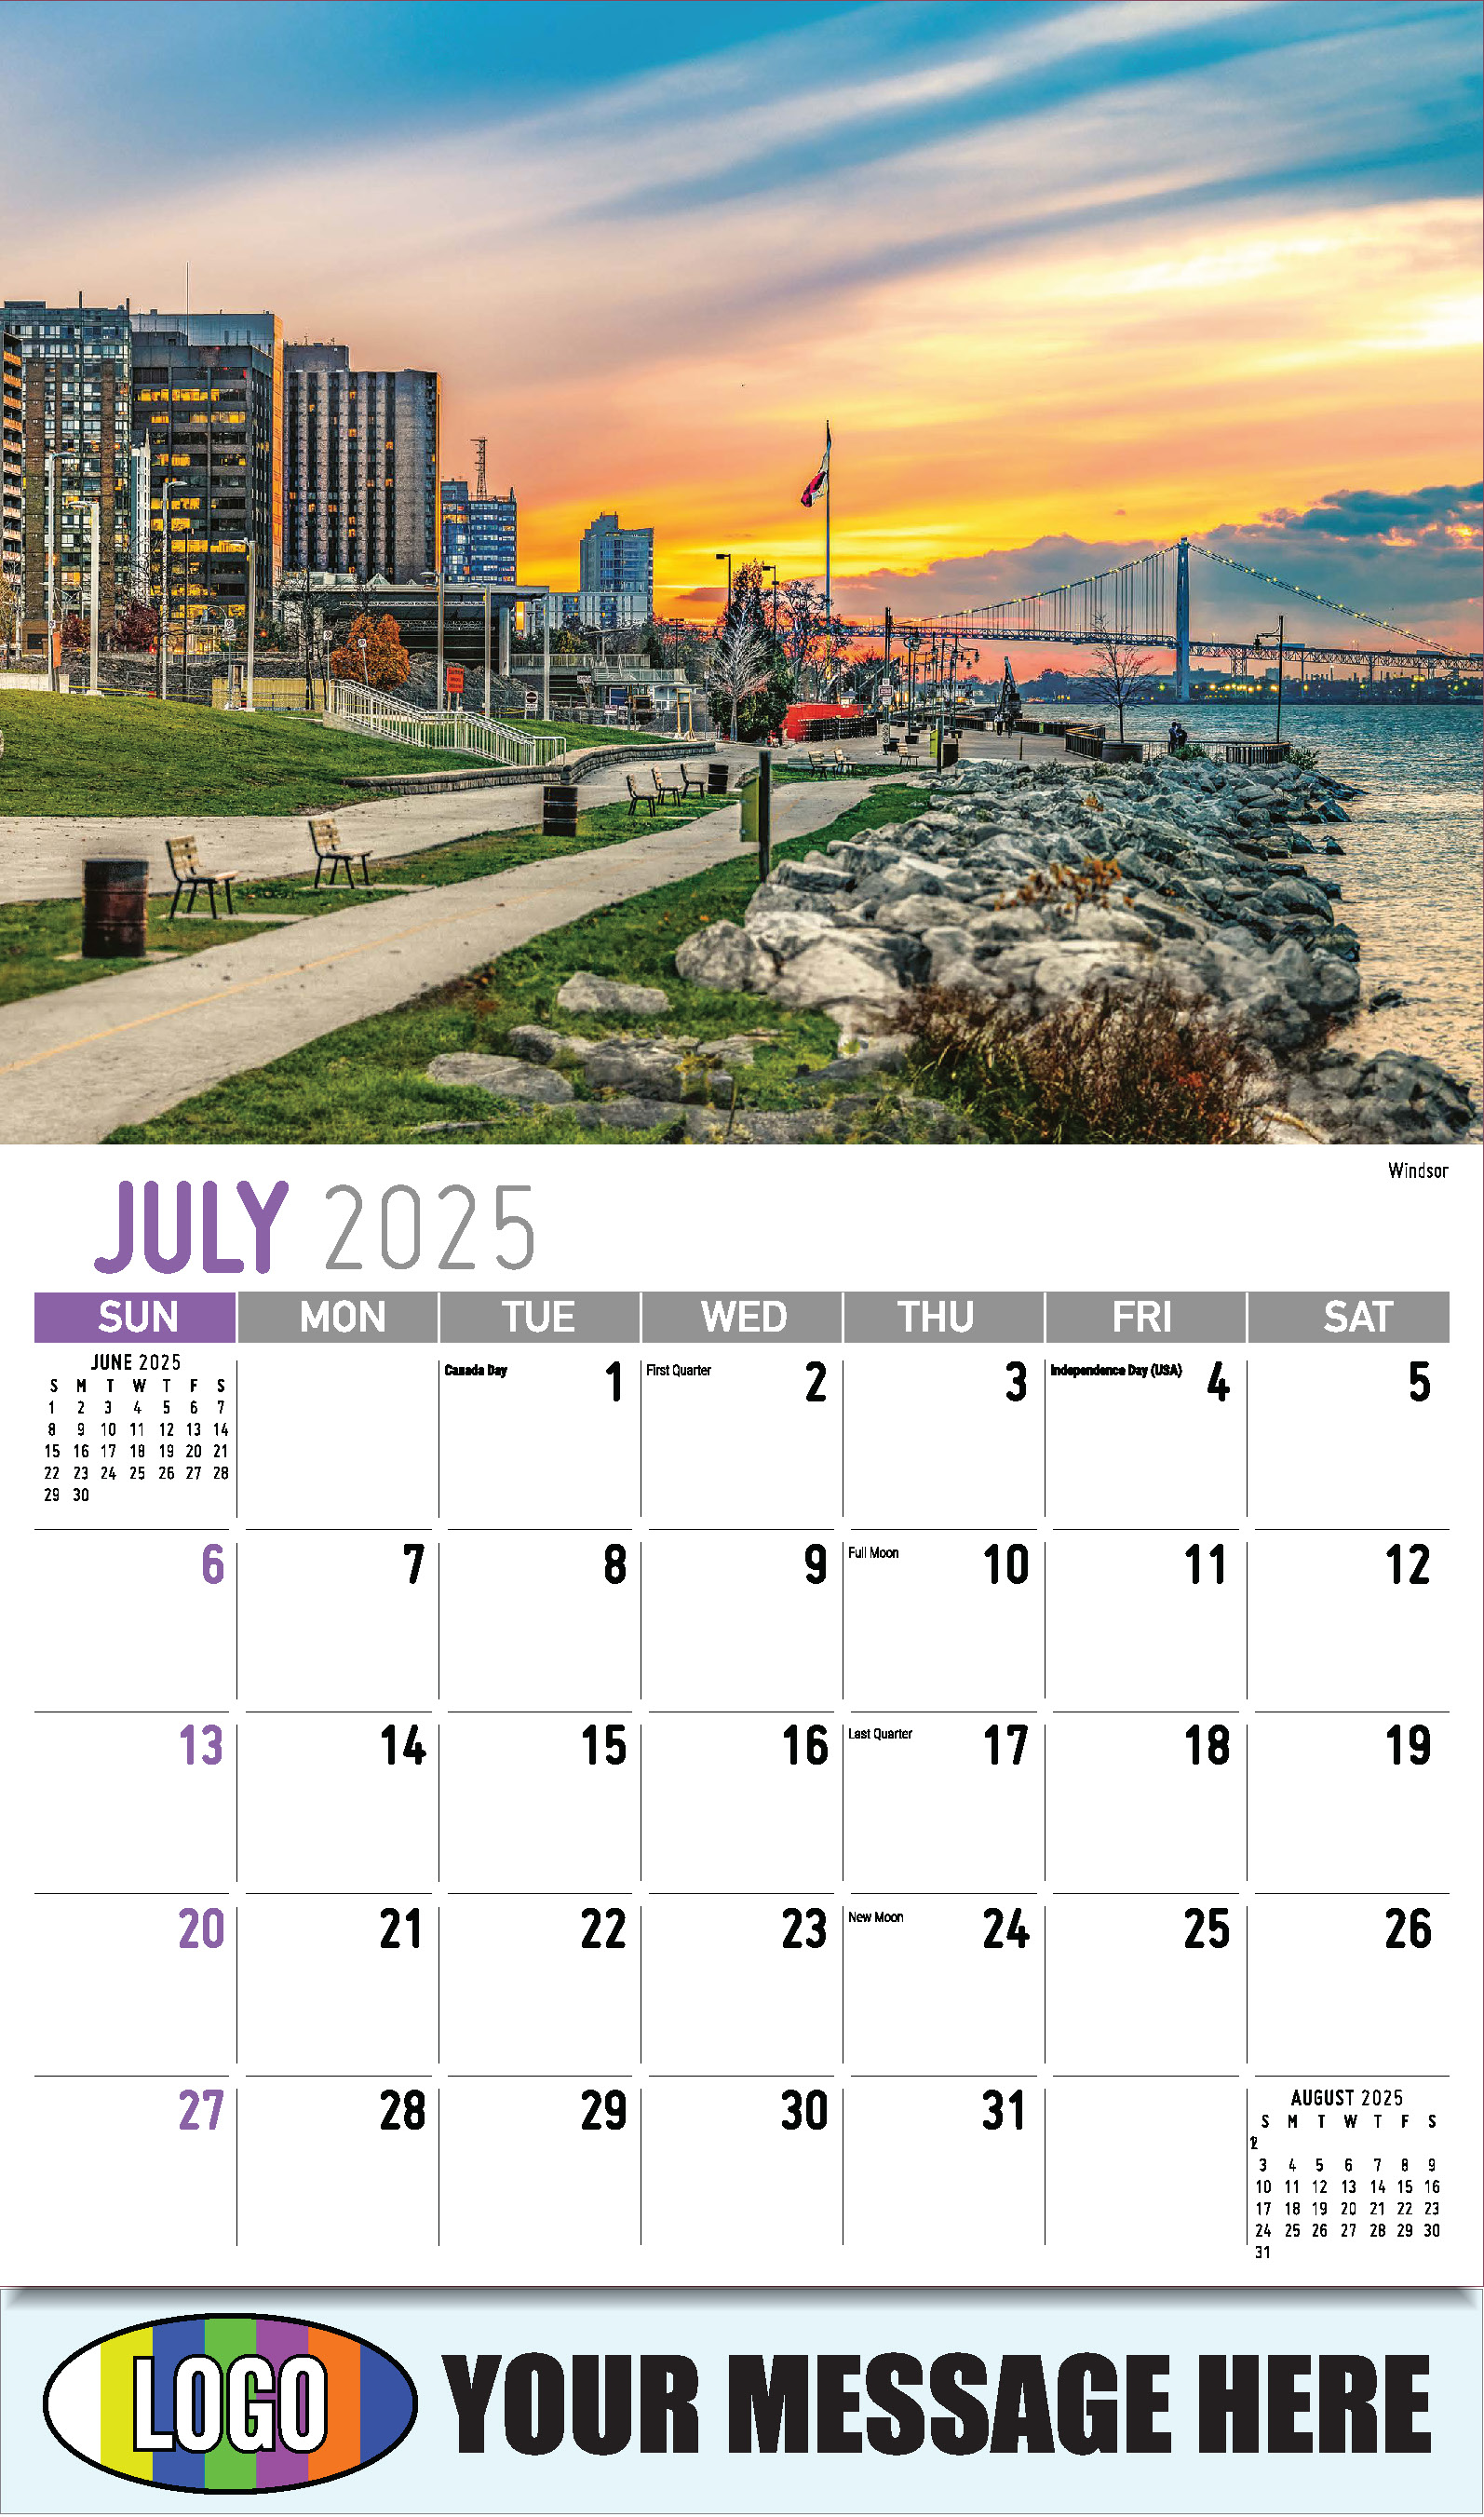 Scenes of Ontario 2025 Business Promo Wall Calendar - July